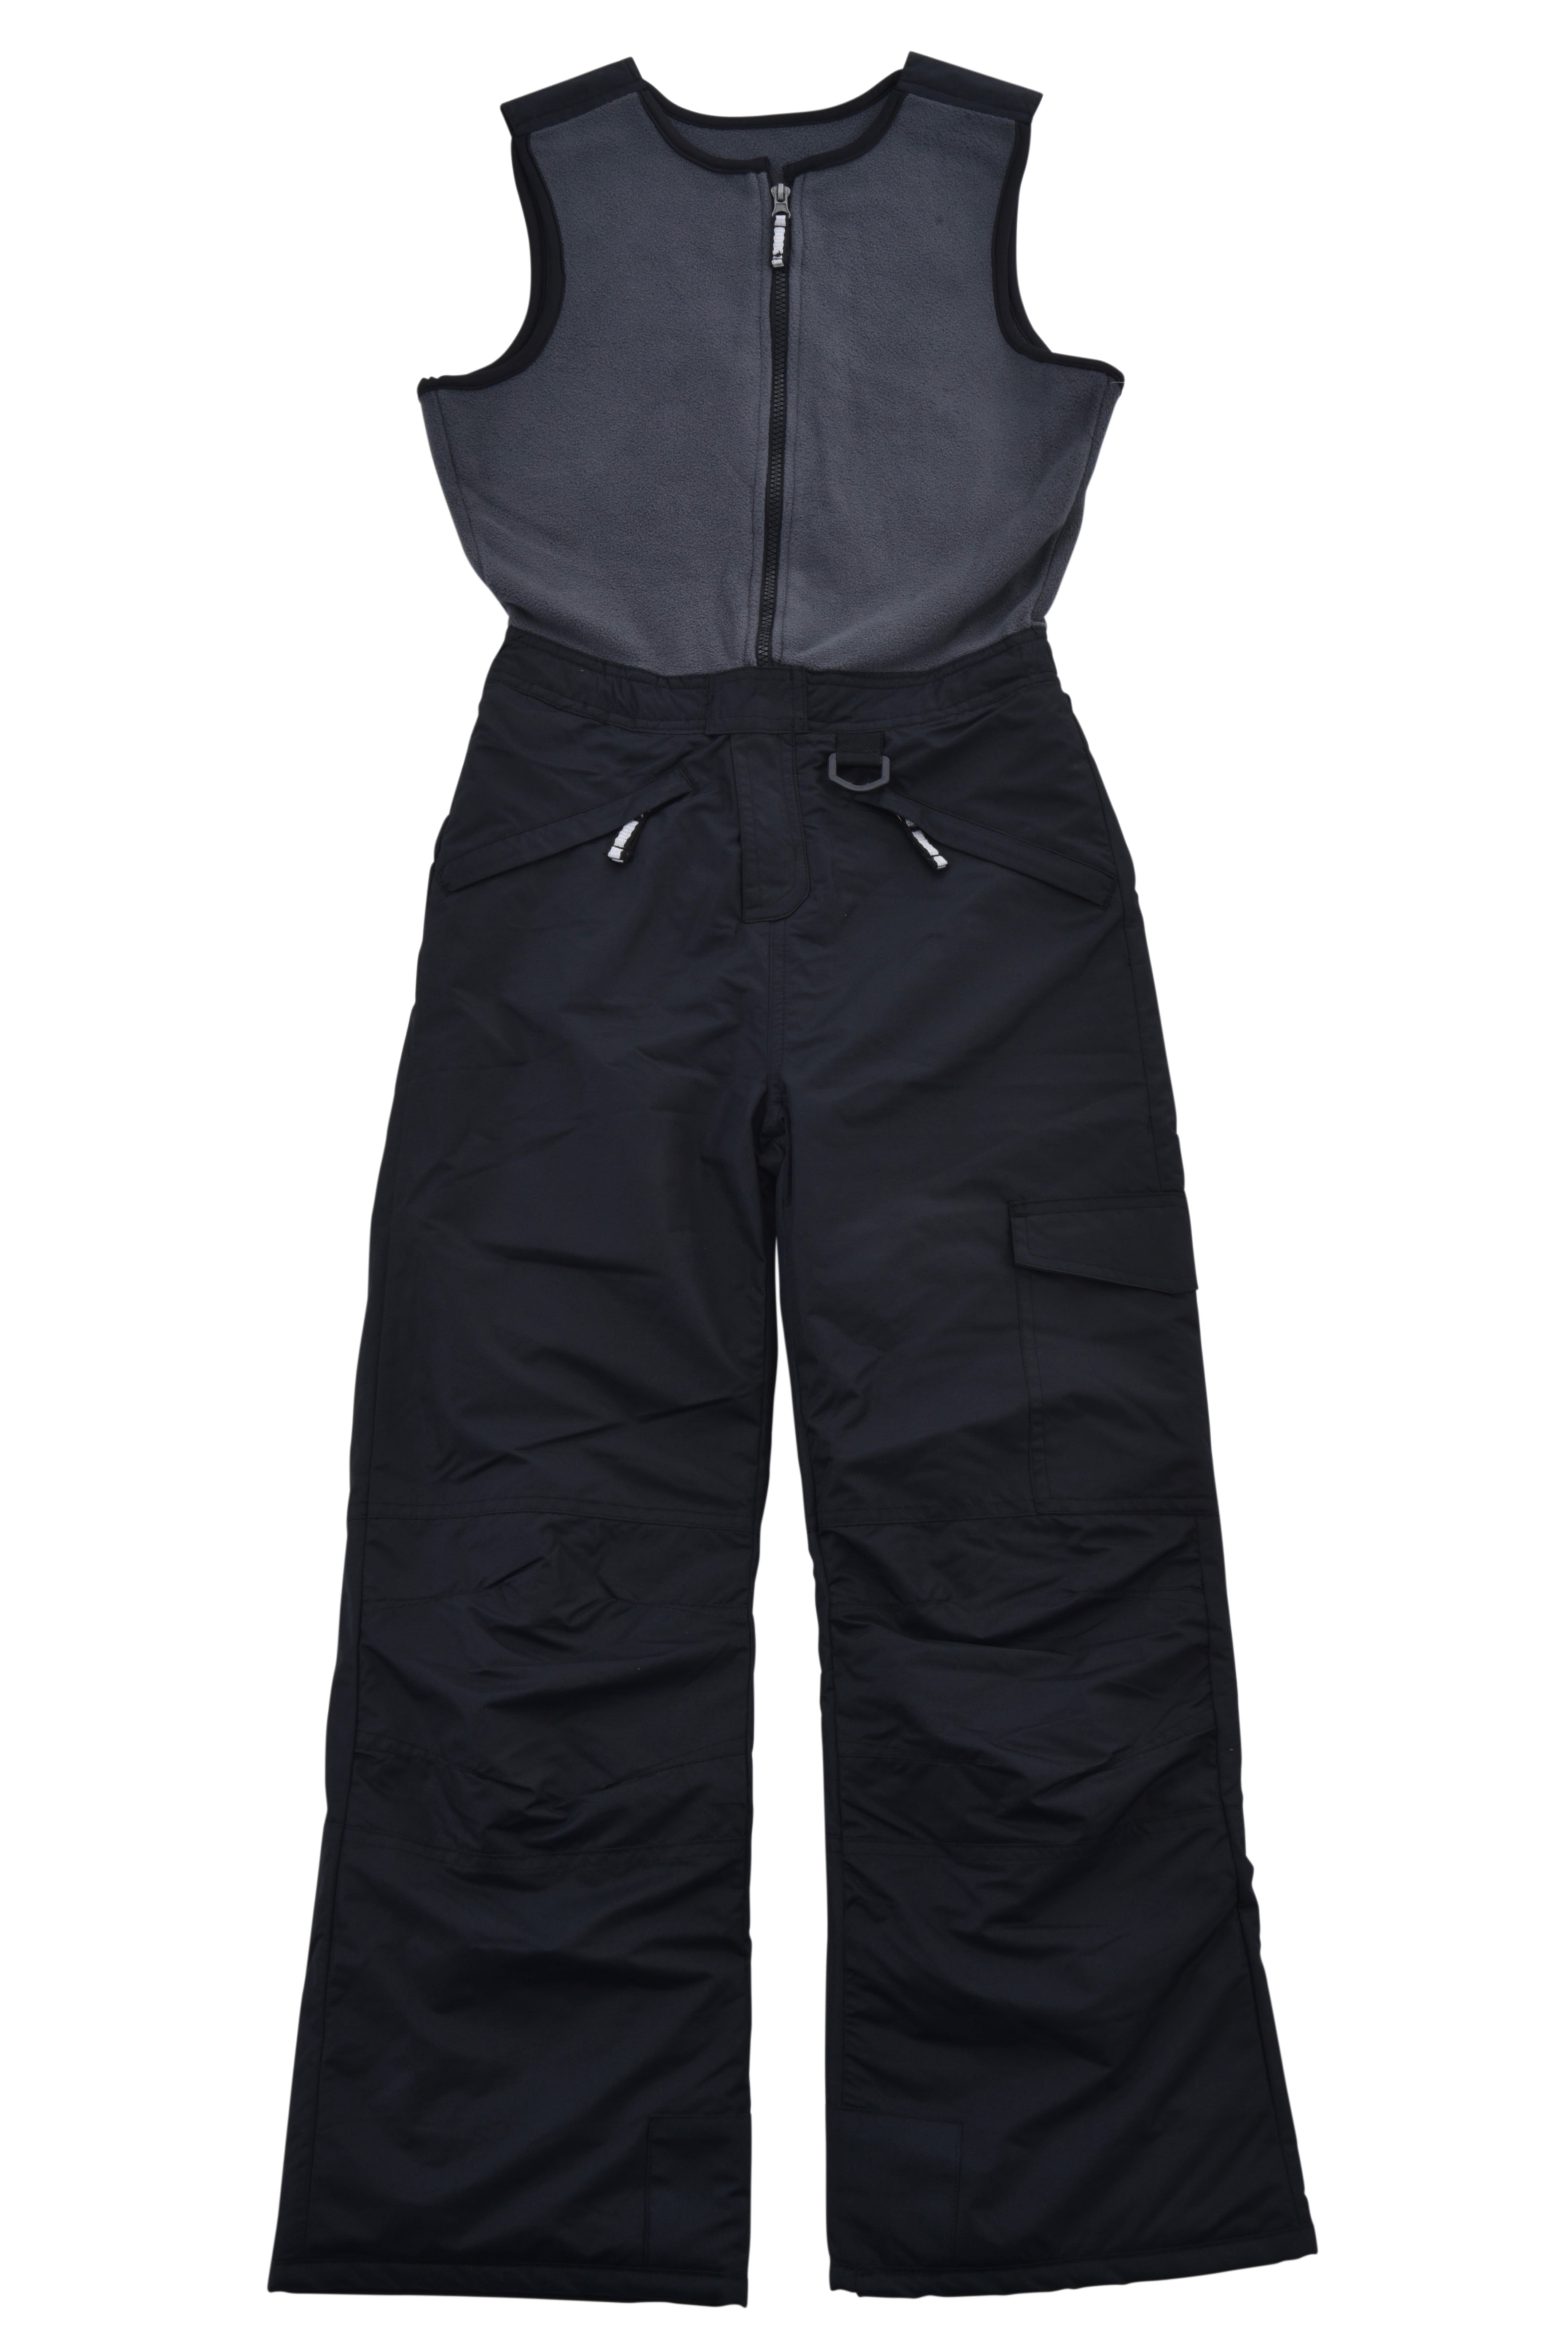 Arctic Quest Polar Fleece Water Resistant Insulated Unisex Boys and Girls Unisex Ski & Snow Bib Pants Overalls 